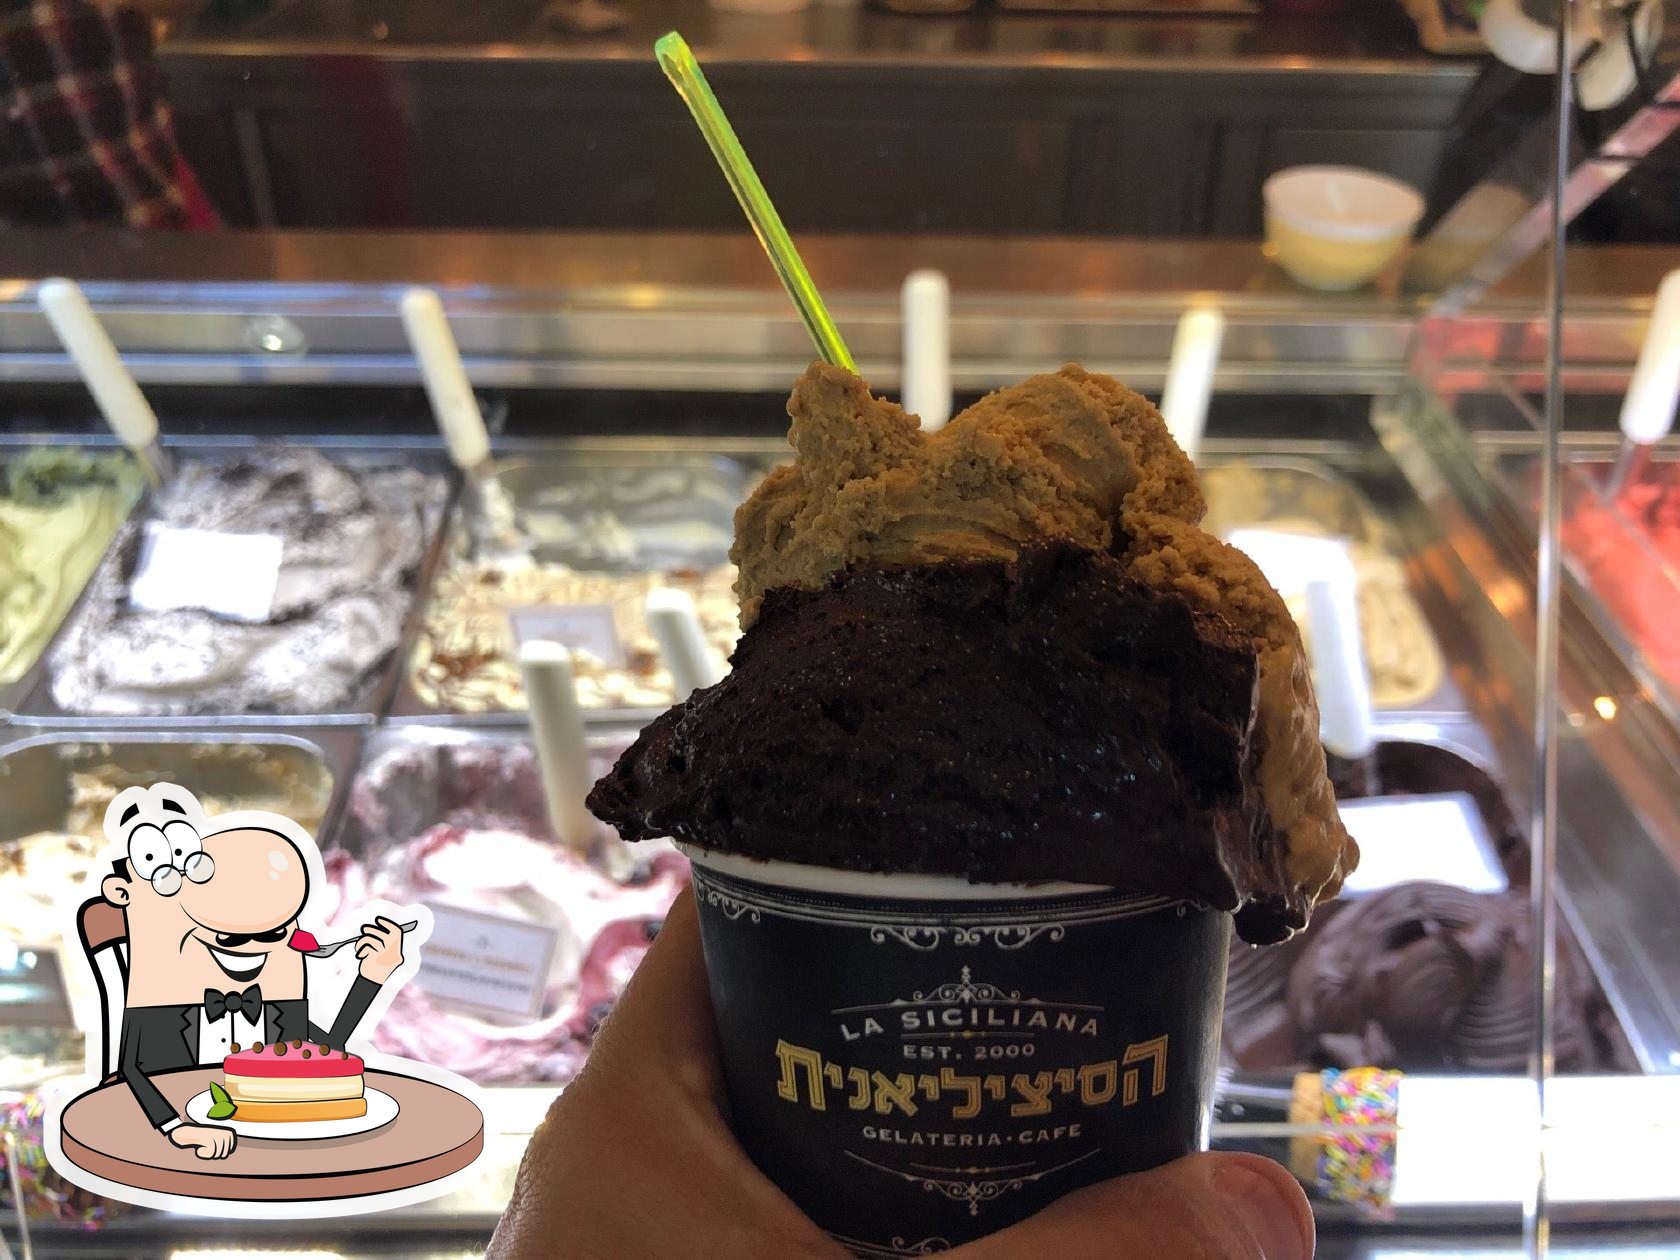 Siciliana Cafe - Tel Aviv Ice Cream - HappyCow